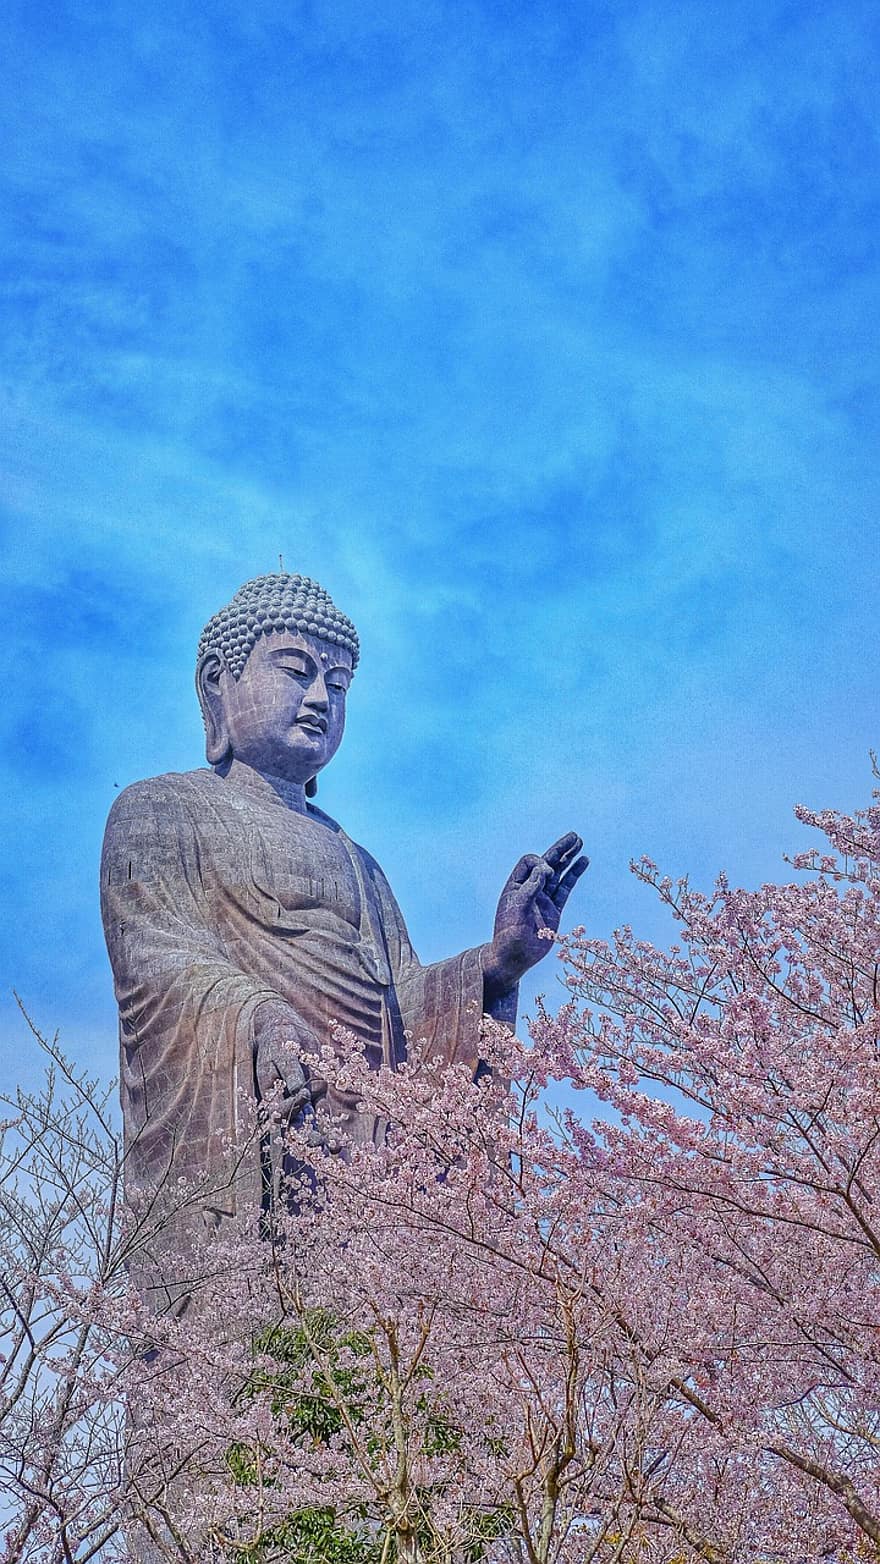 Buddha, ushiku daibutsu, Japani, Ibaraki, patsas, veistos, maamerkki, matkailukohde, monumentti, buddhalaisuus, uskonto